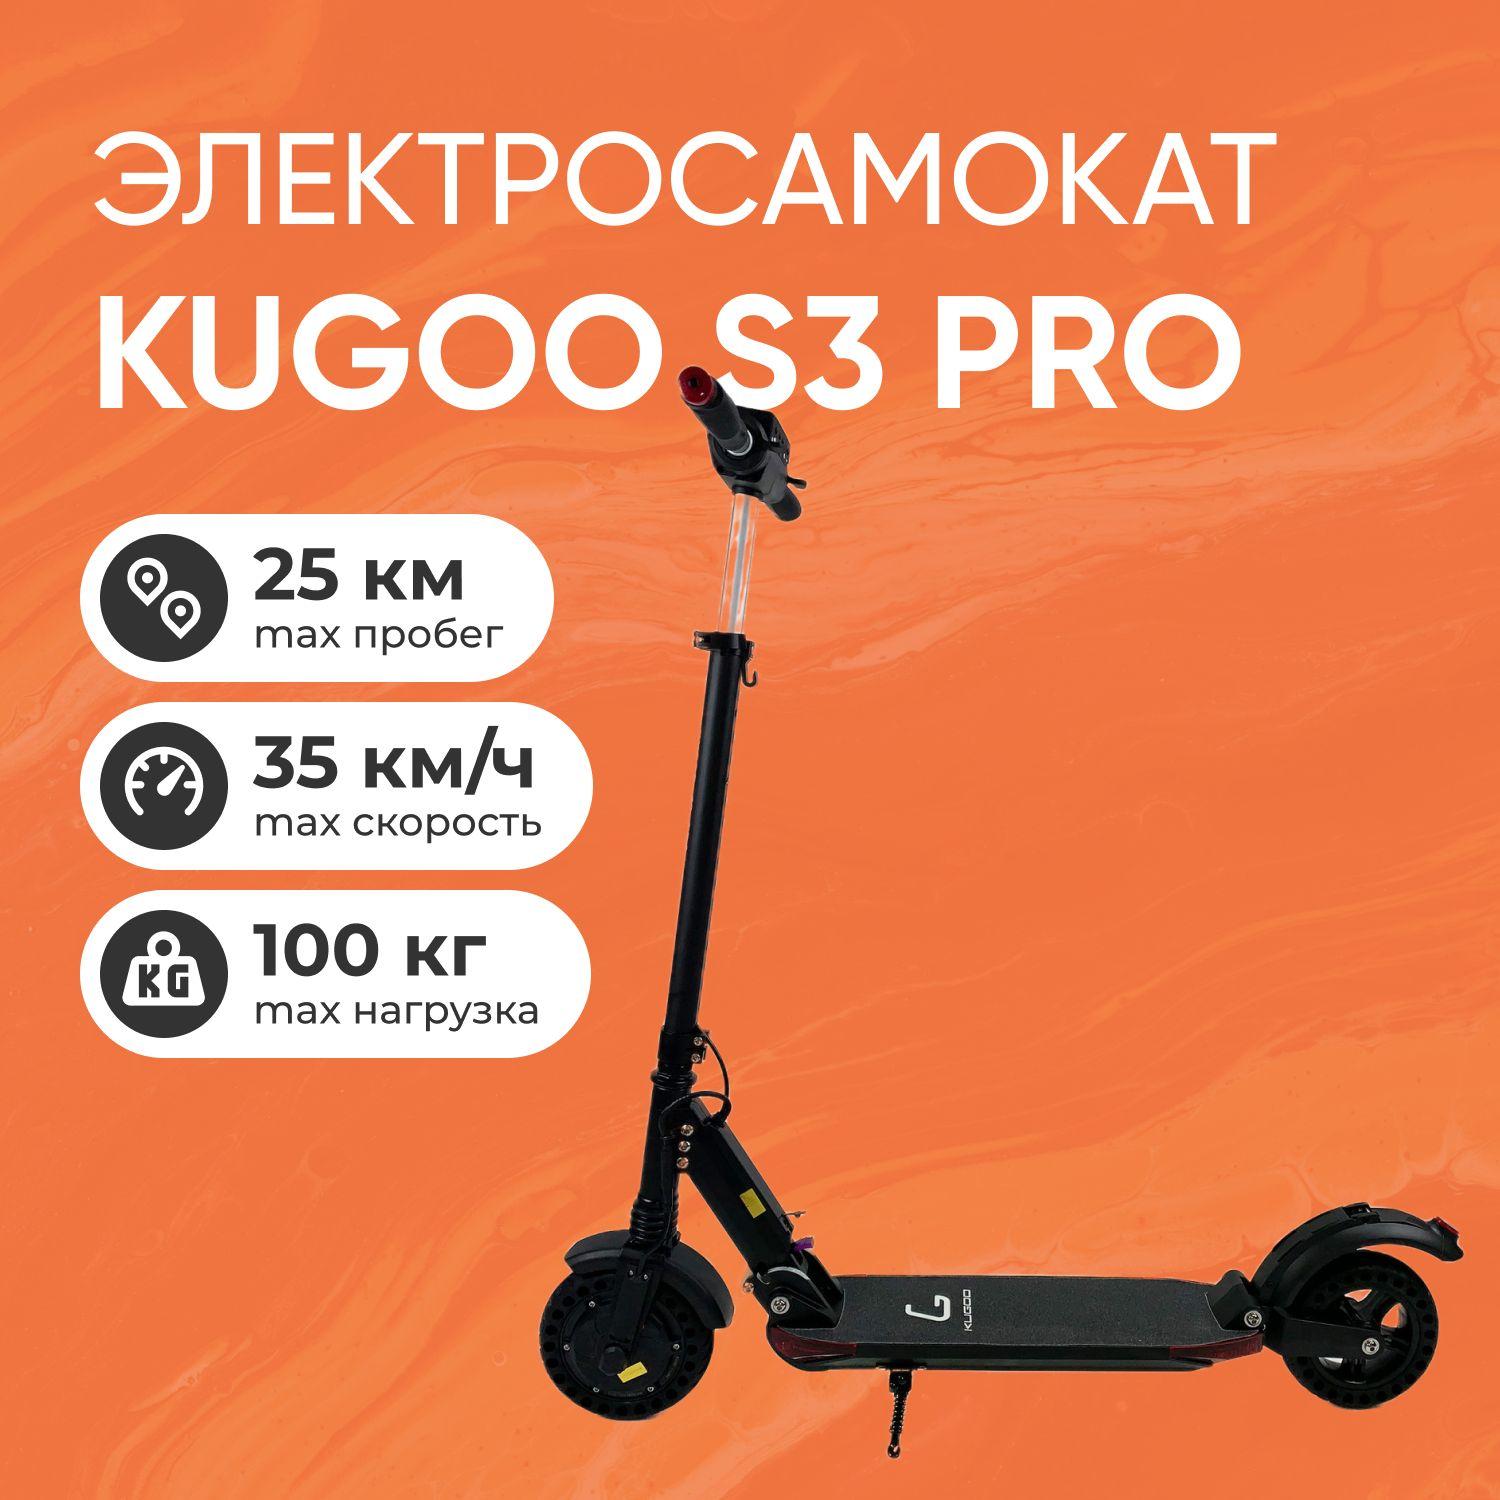 Электросамокат Kugoo S3 PRO, мощность 350 Вт, до 35 км/ч, пробег до 25 км.